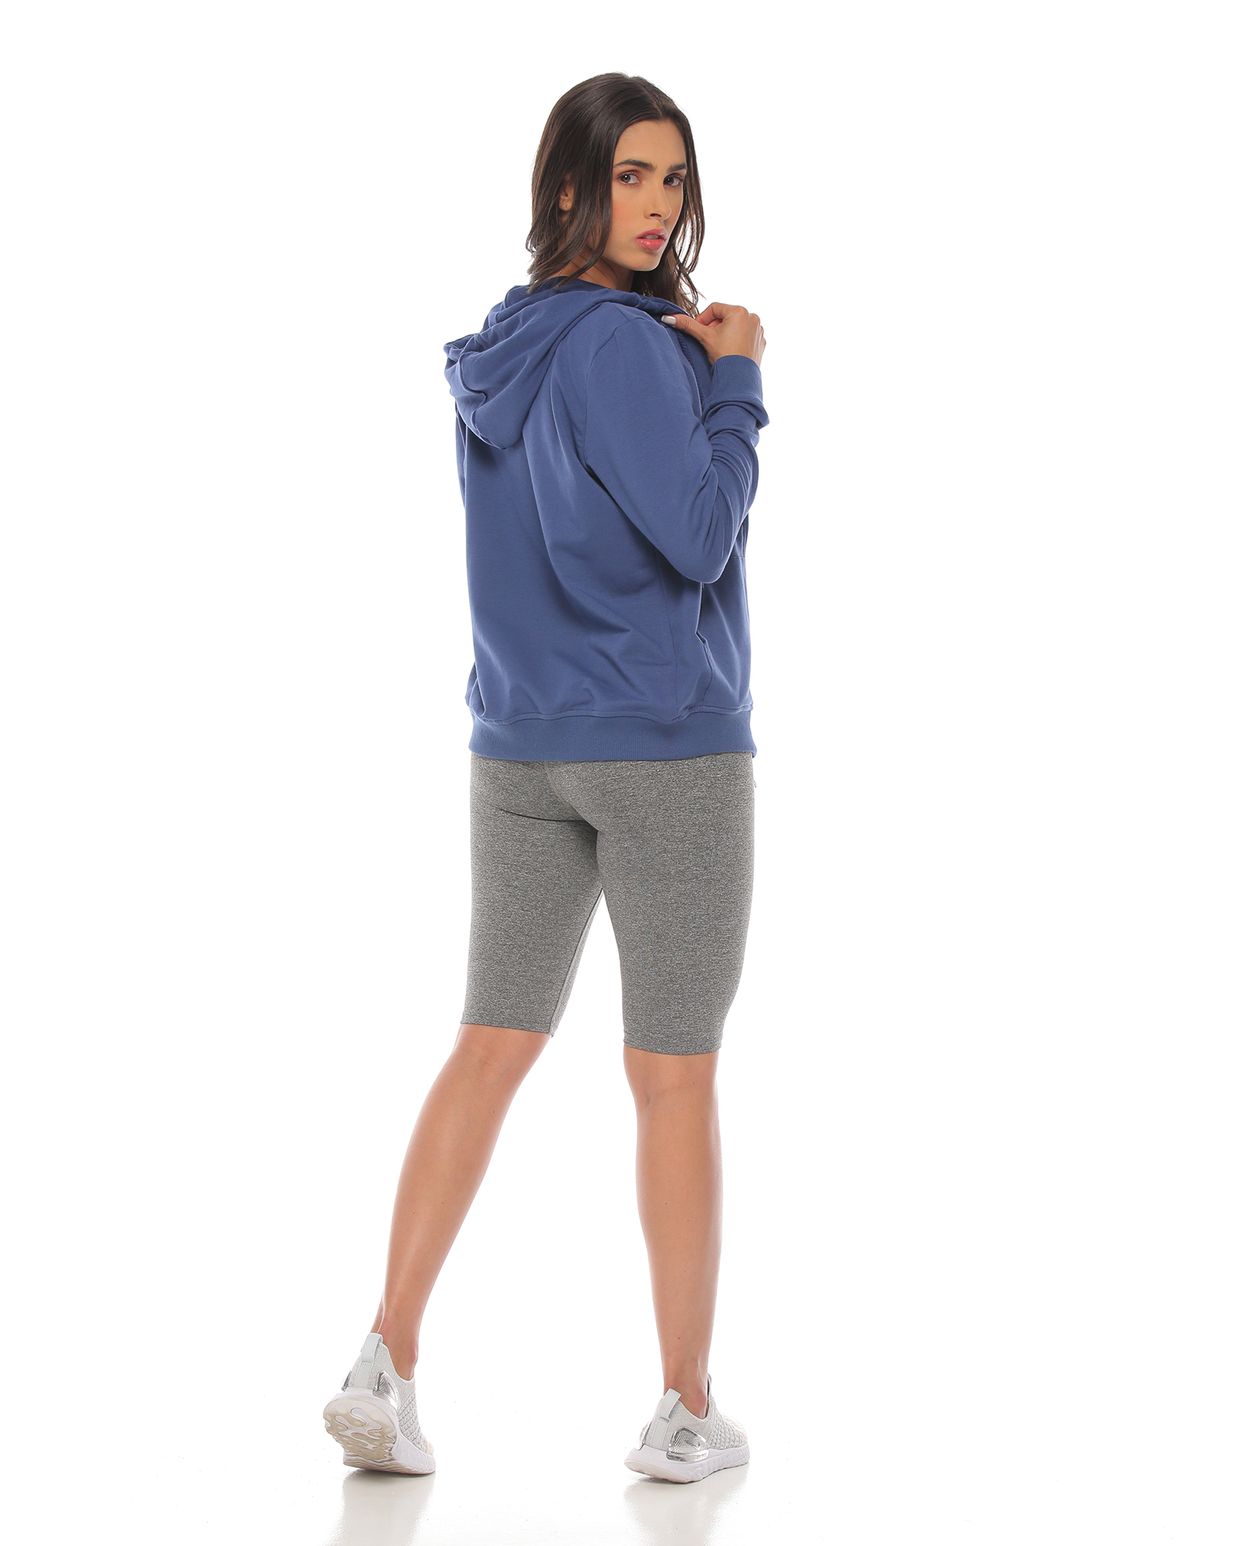 Chaqueta deportiva mujer, con capucha, color azul - racketball movil